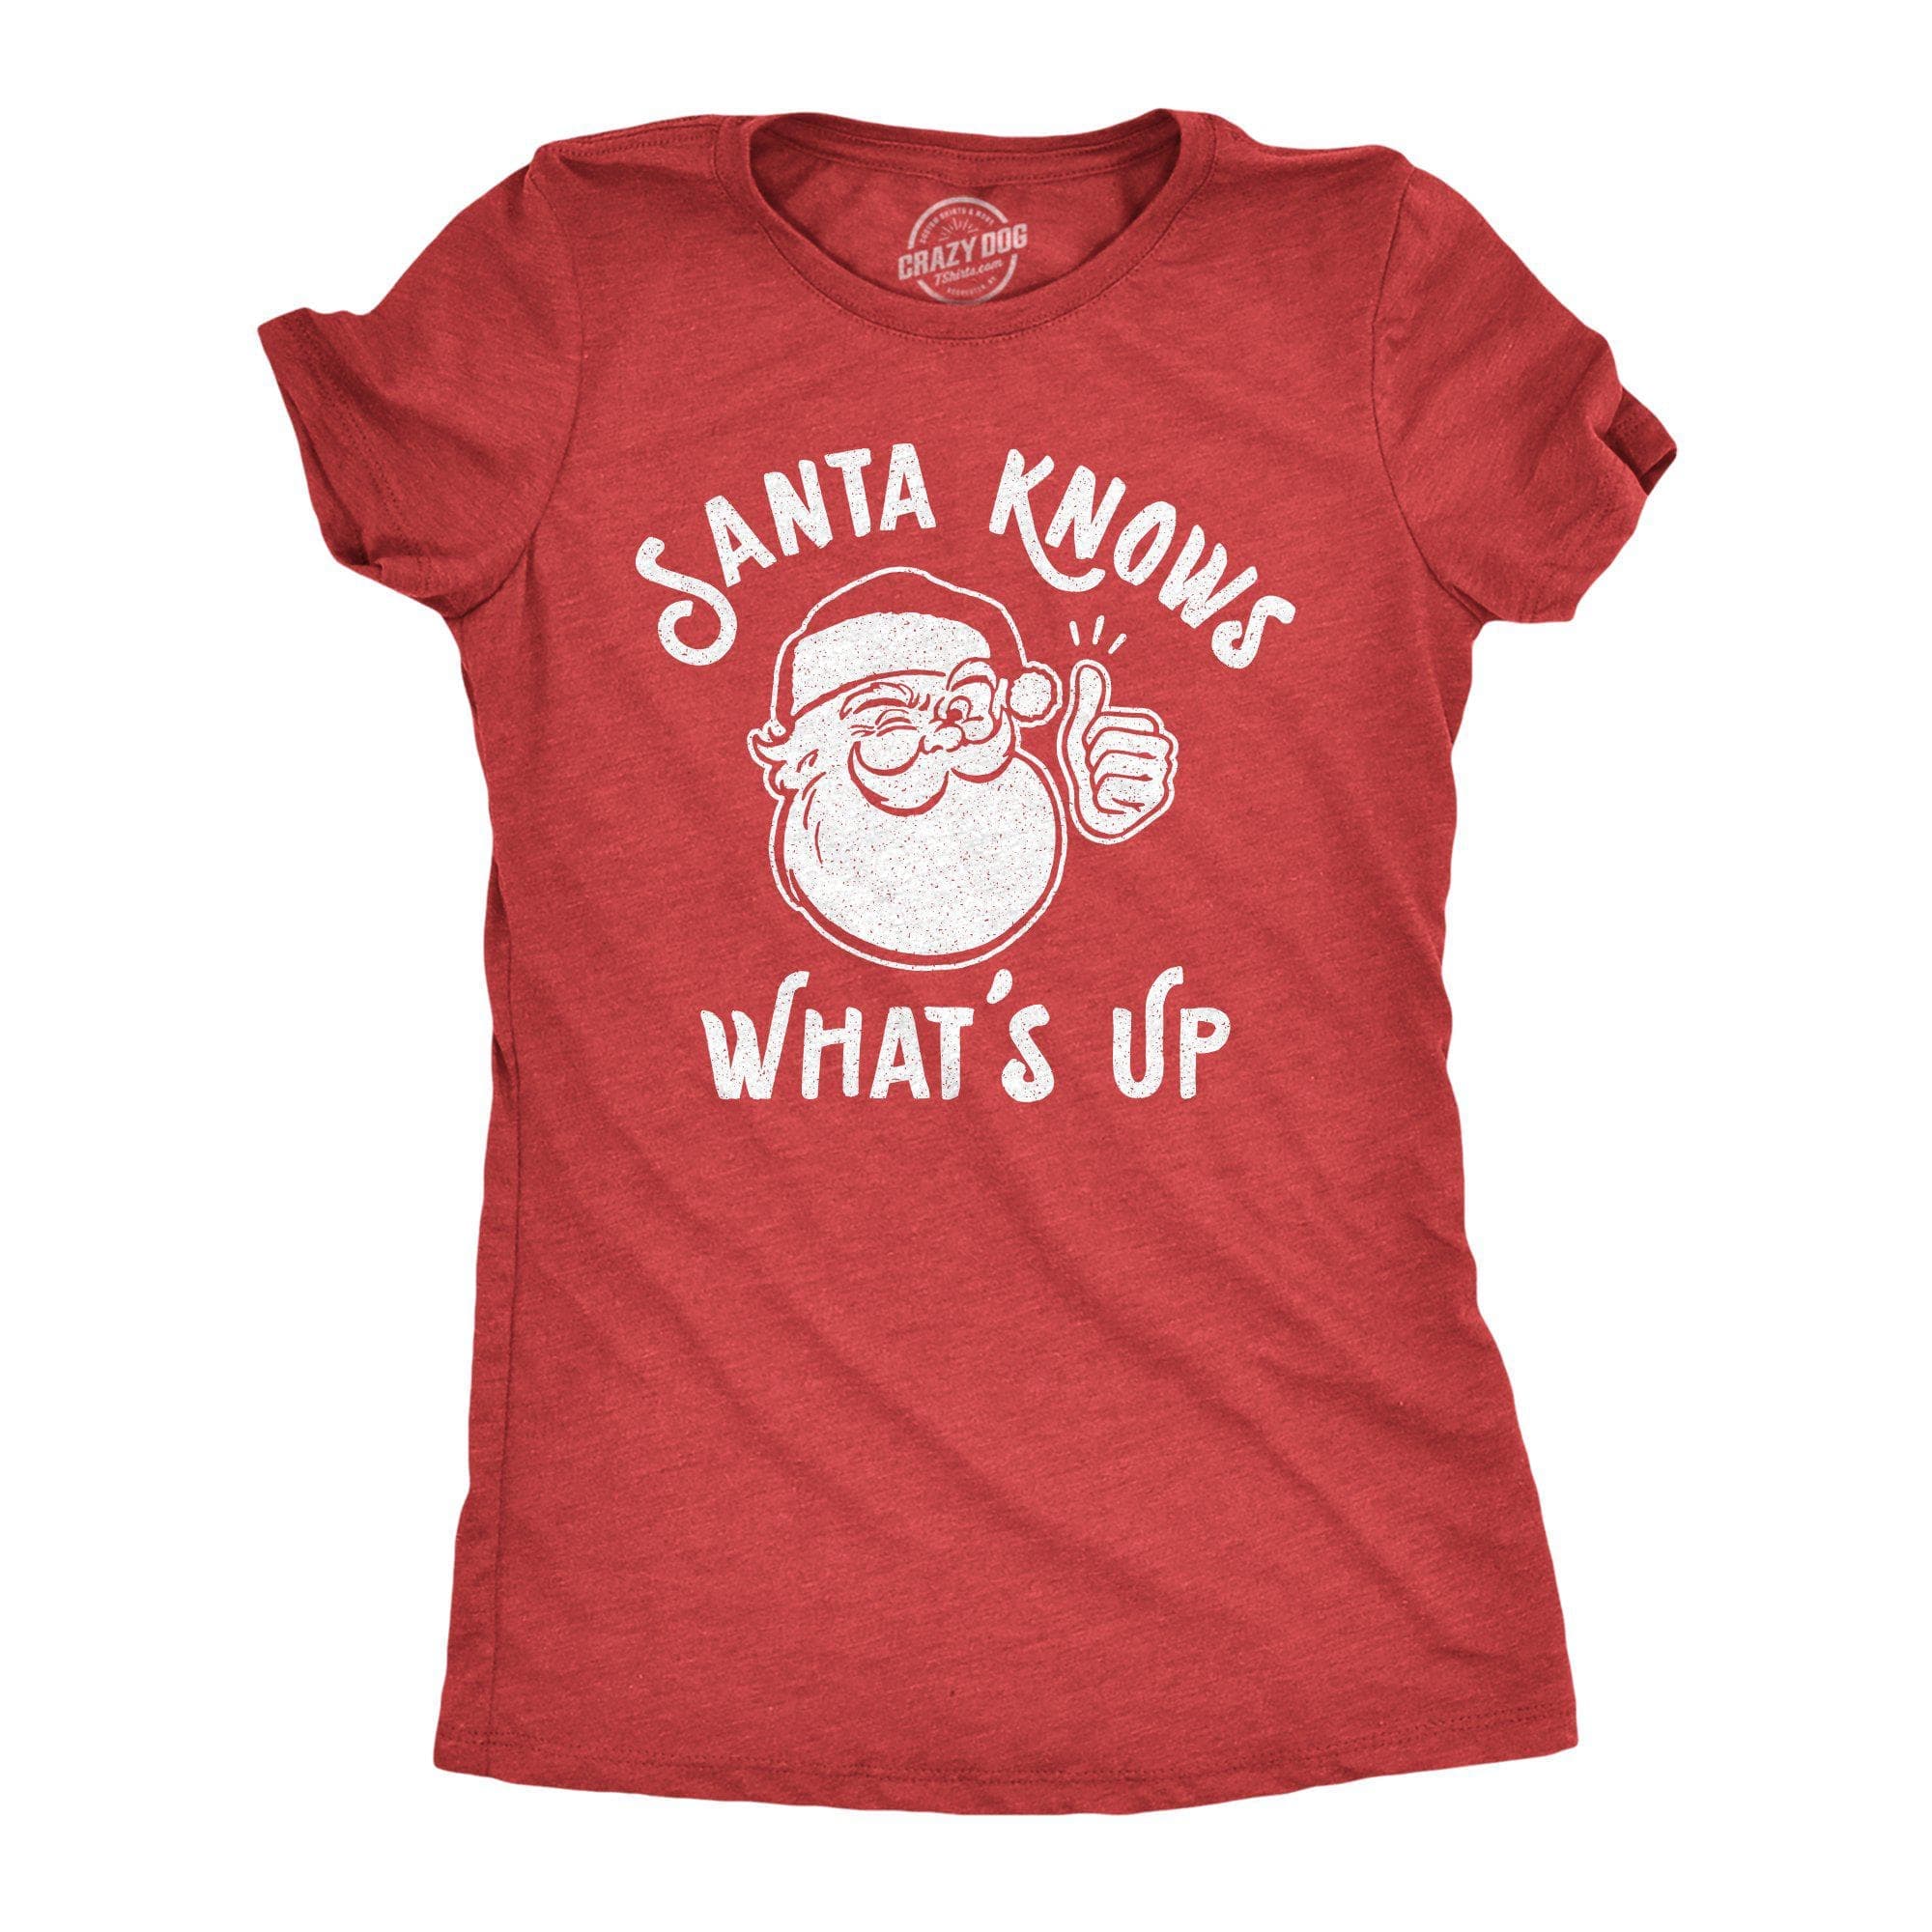 Santa Knows What's Up Women's Tshirt - Crazy Dog T-Shirts